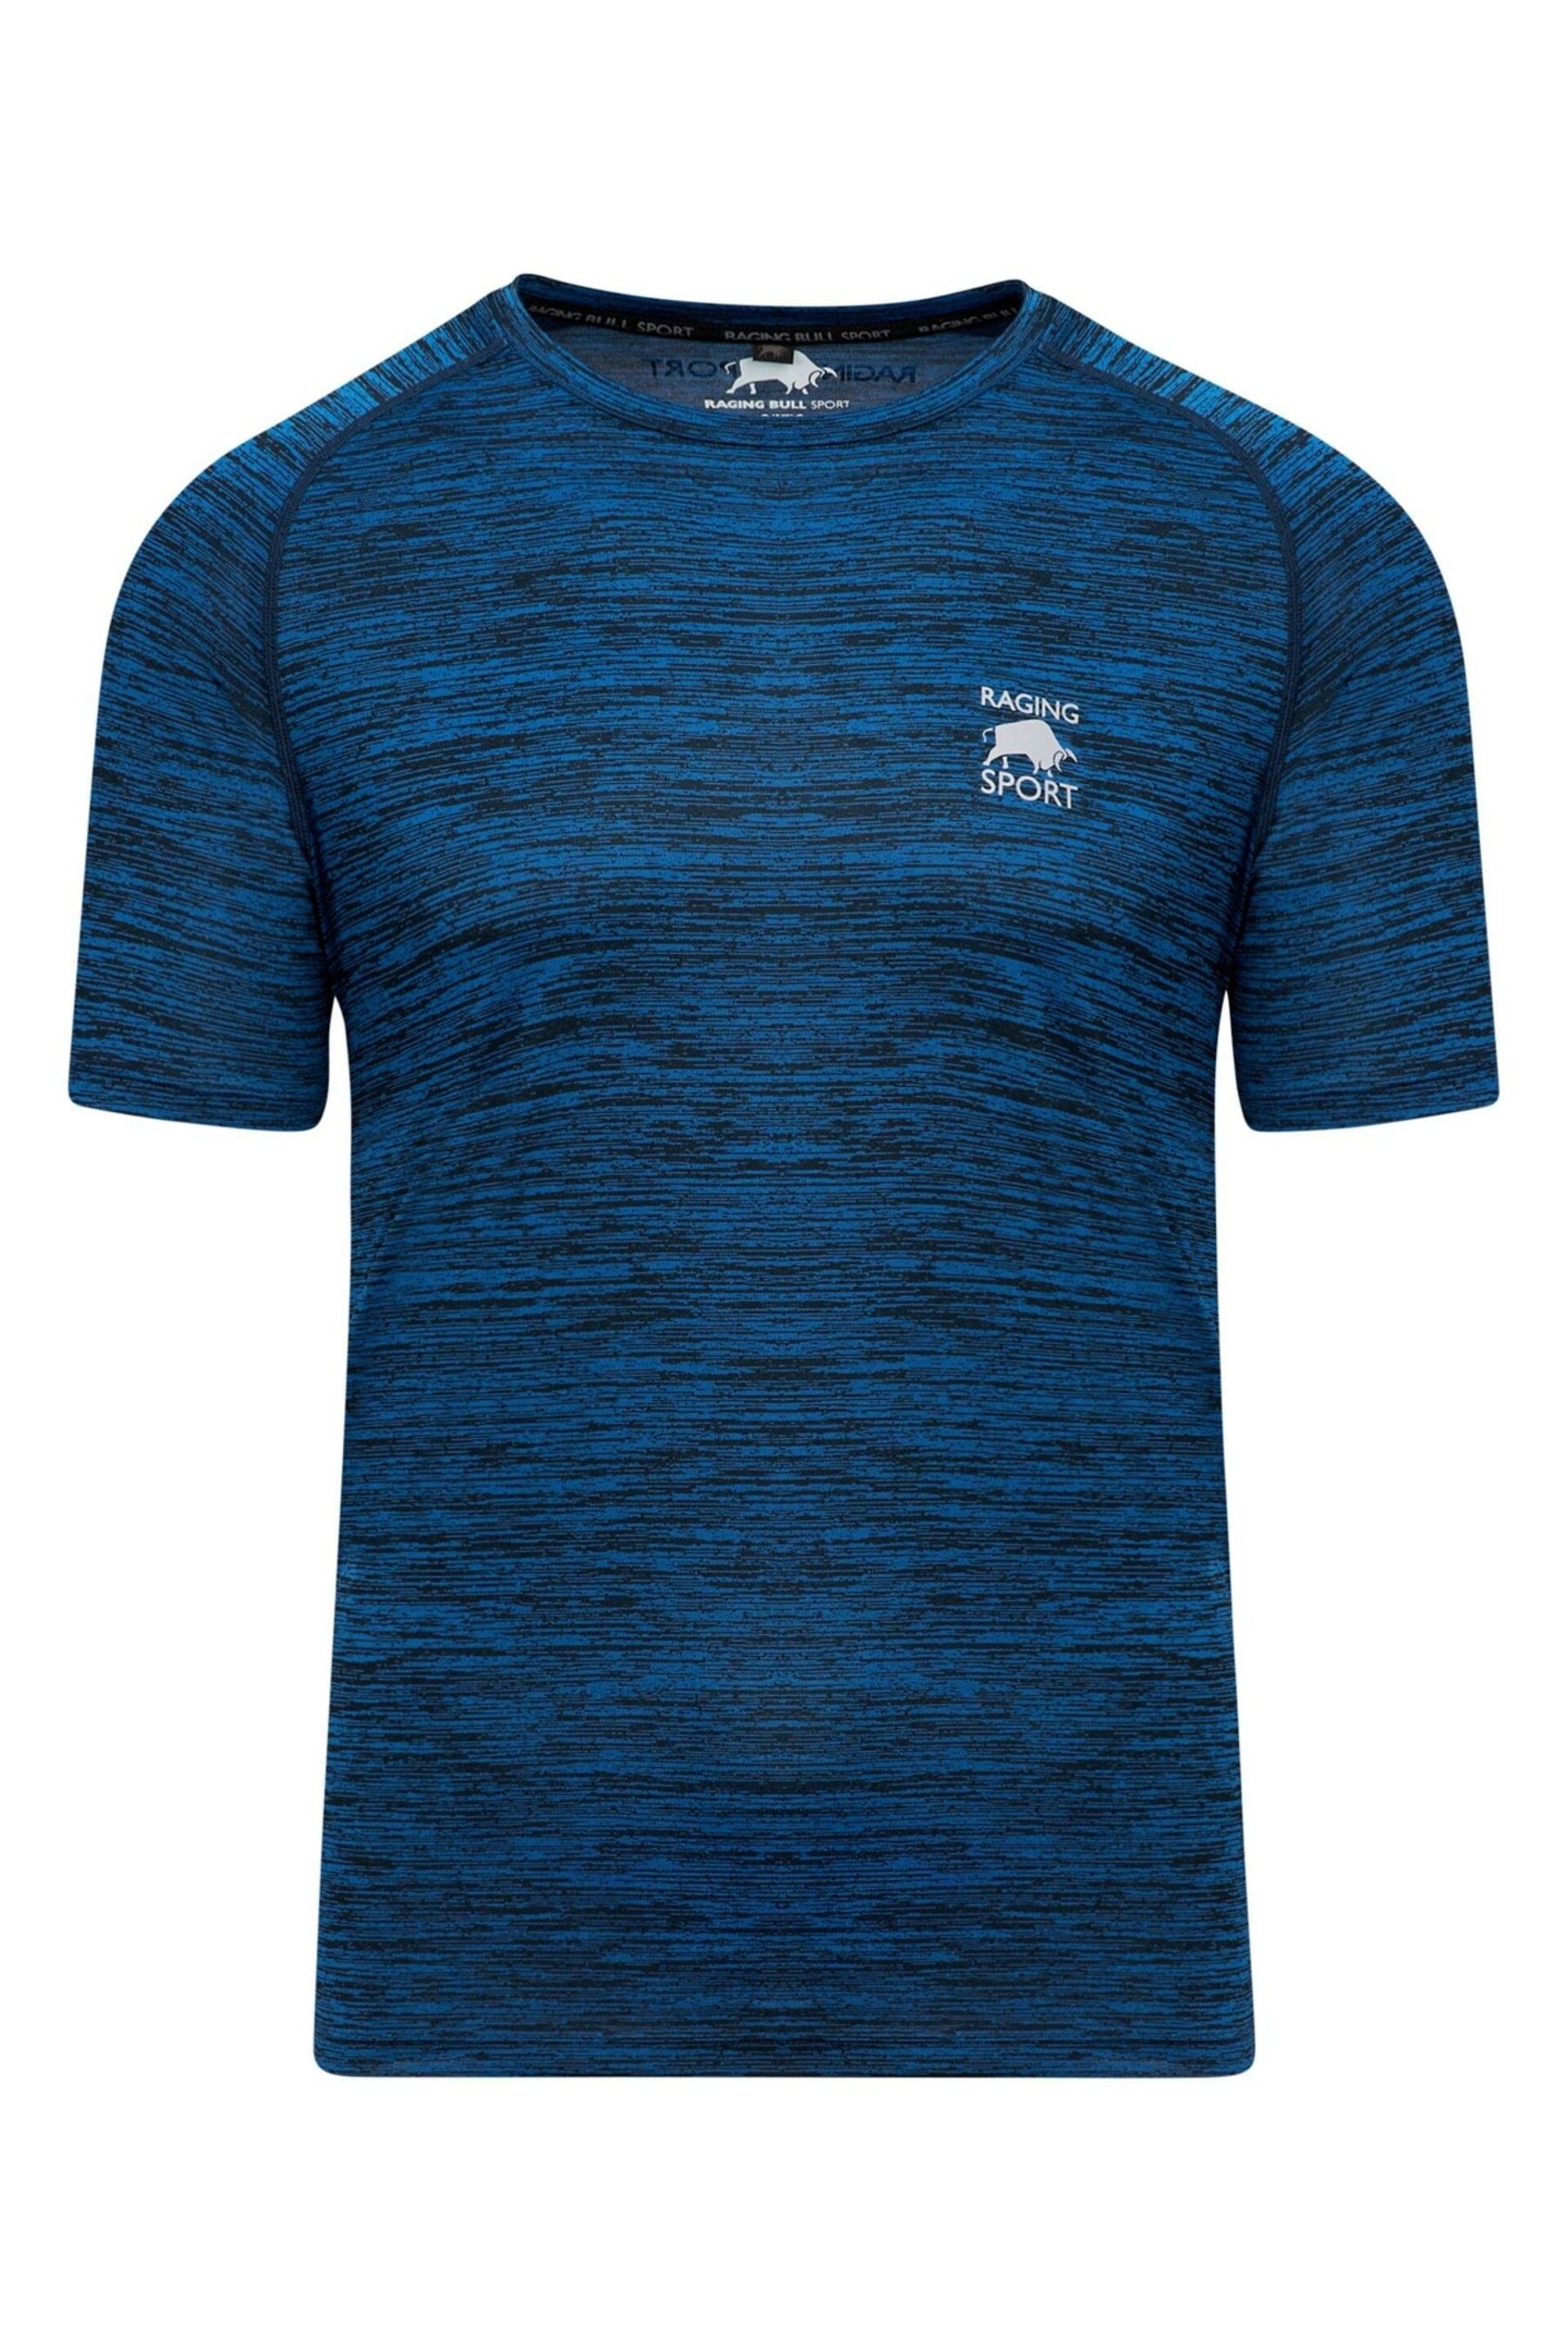 Raging Bull Blue Performance T-Shirt - Image 3 of 3